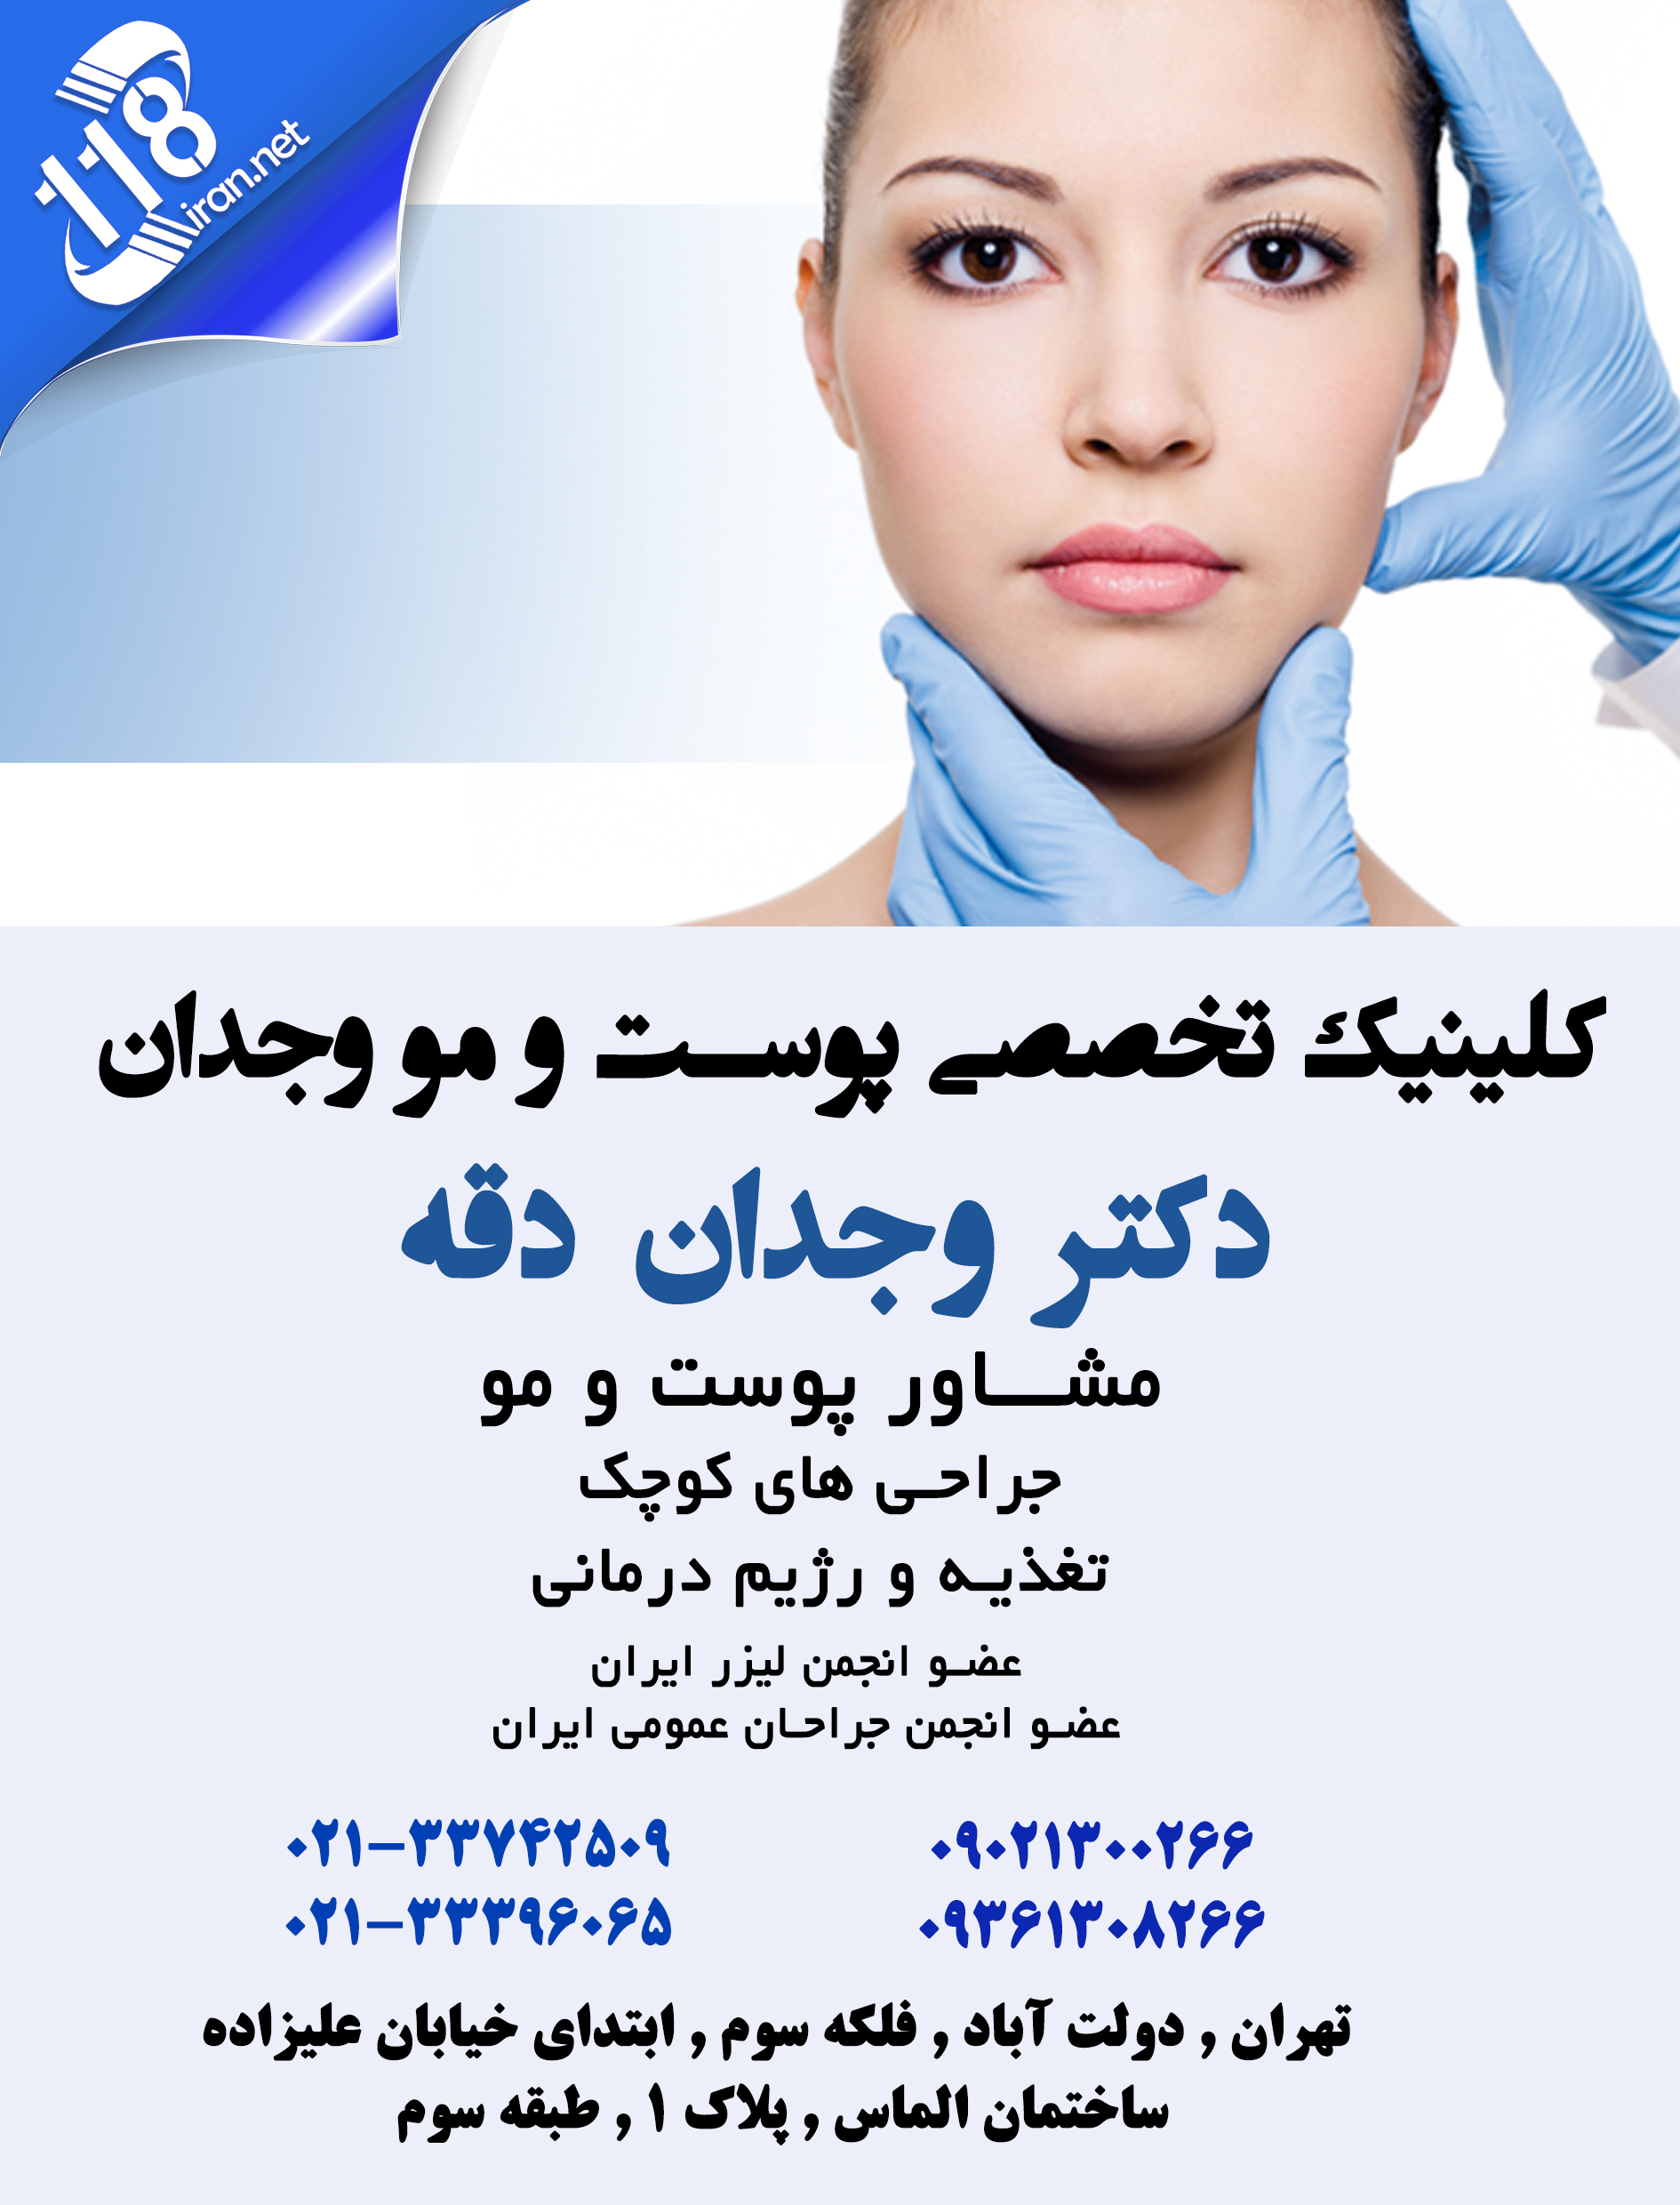  کلینیک تخصصی پوست و مو وجدان در تهران